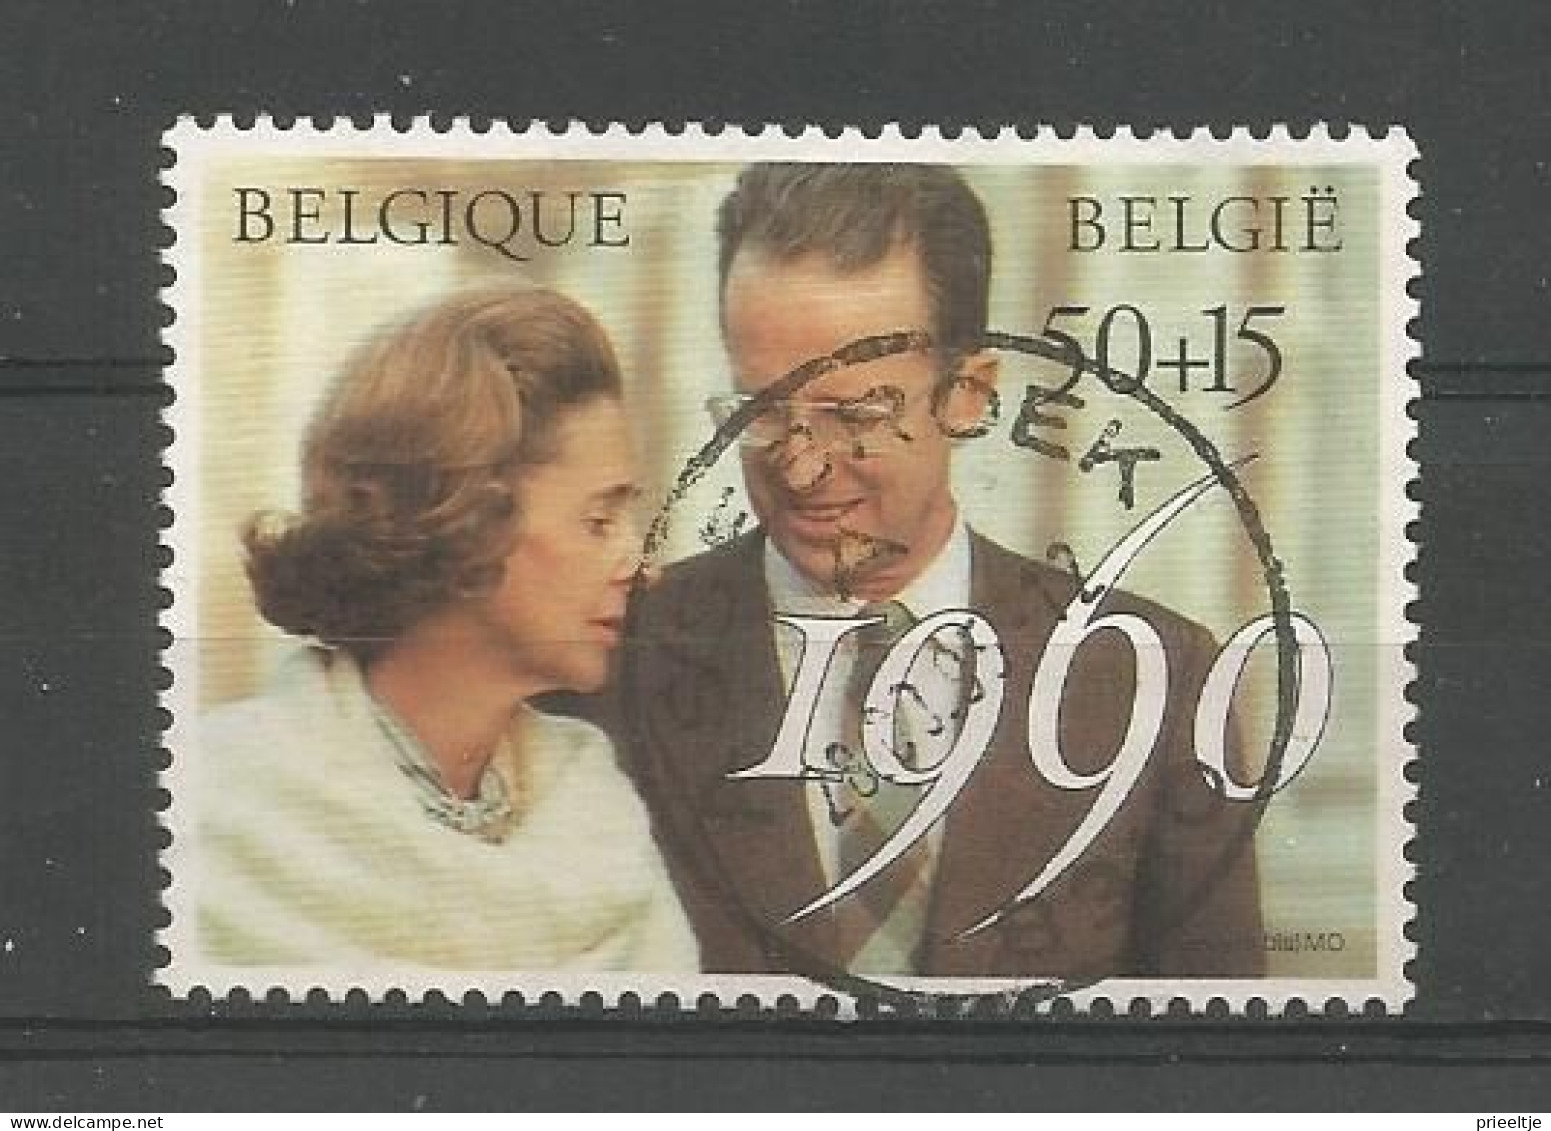 Belgie 1990 Royal Wedding 30th Anniv. OCB 2396  (0) - Used Stamps